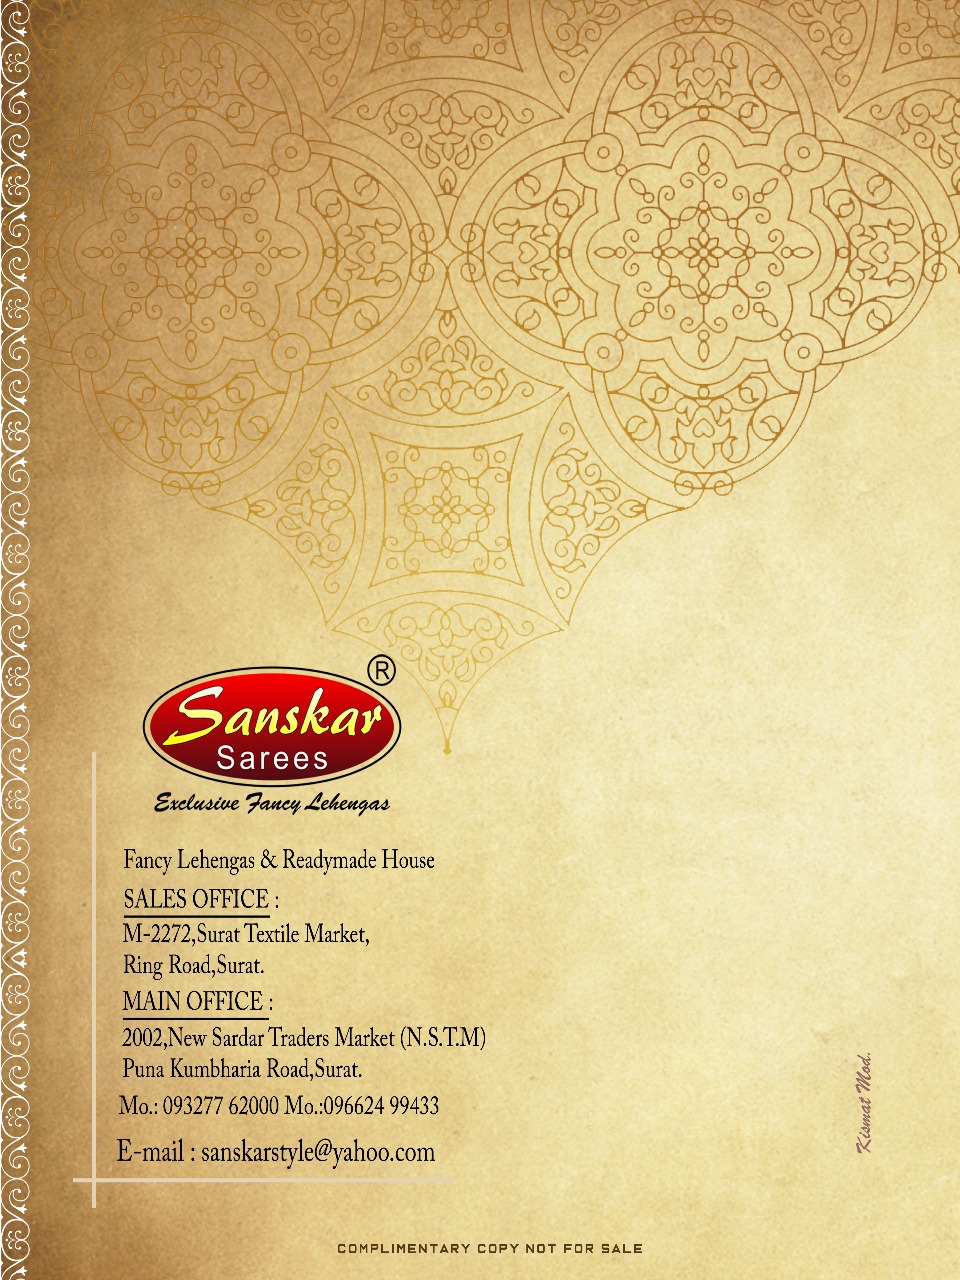 Sanskar sarees presents sequence vol 1 festive collection of lehenga